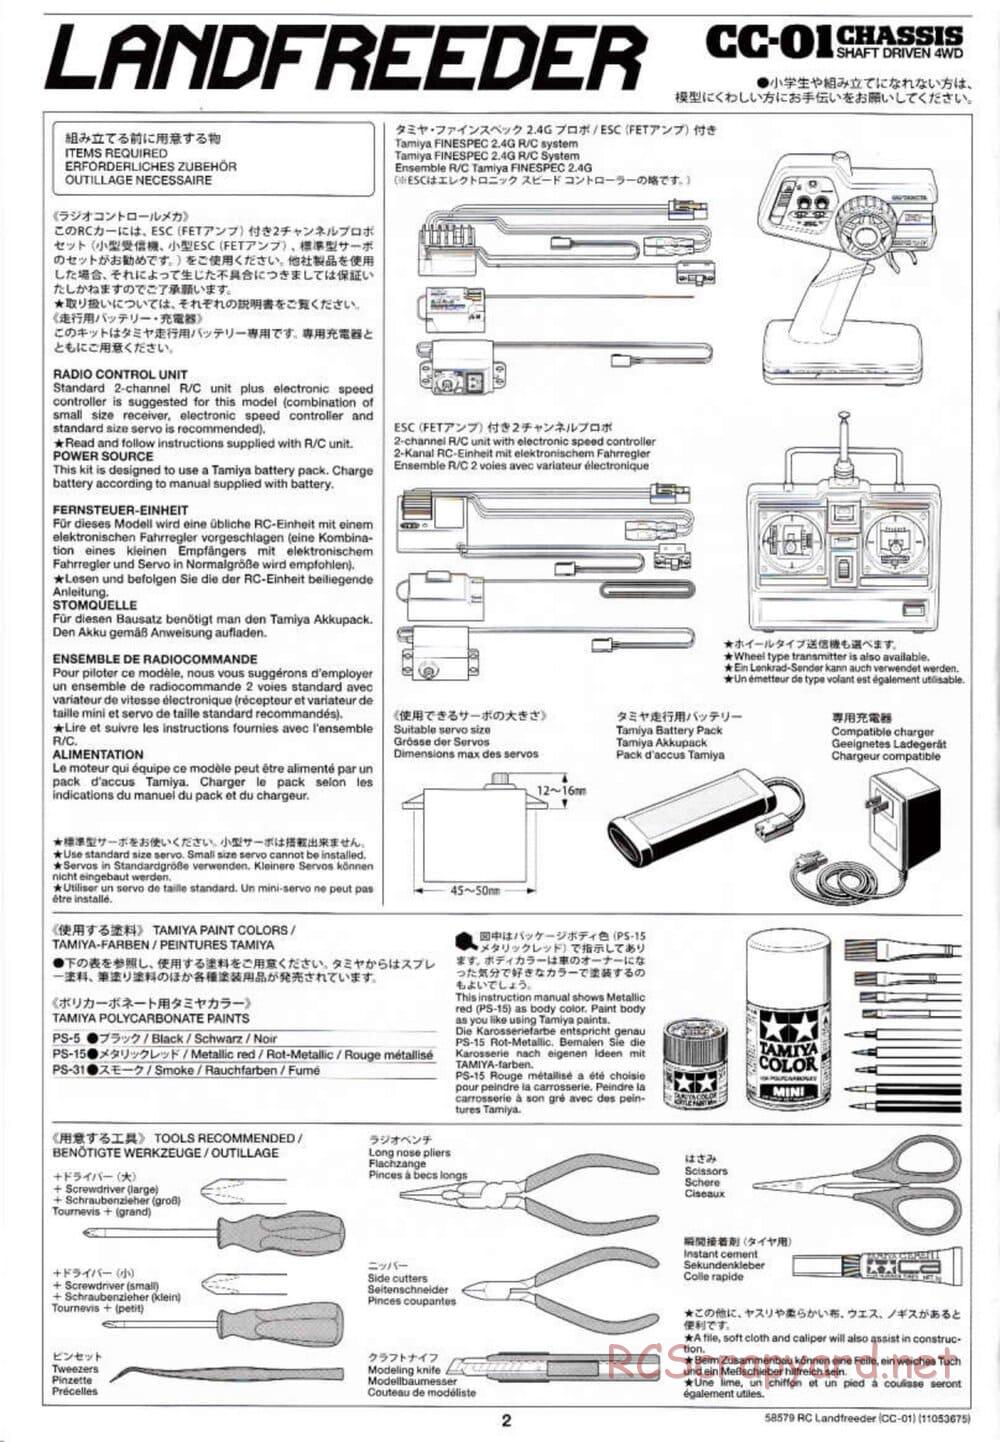 Tamiya - LandFreeder - CC-01 Chassis - Manual - Page 2